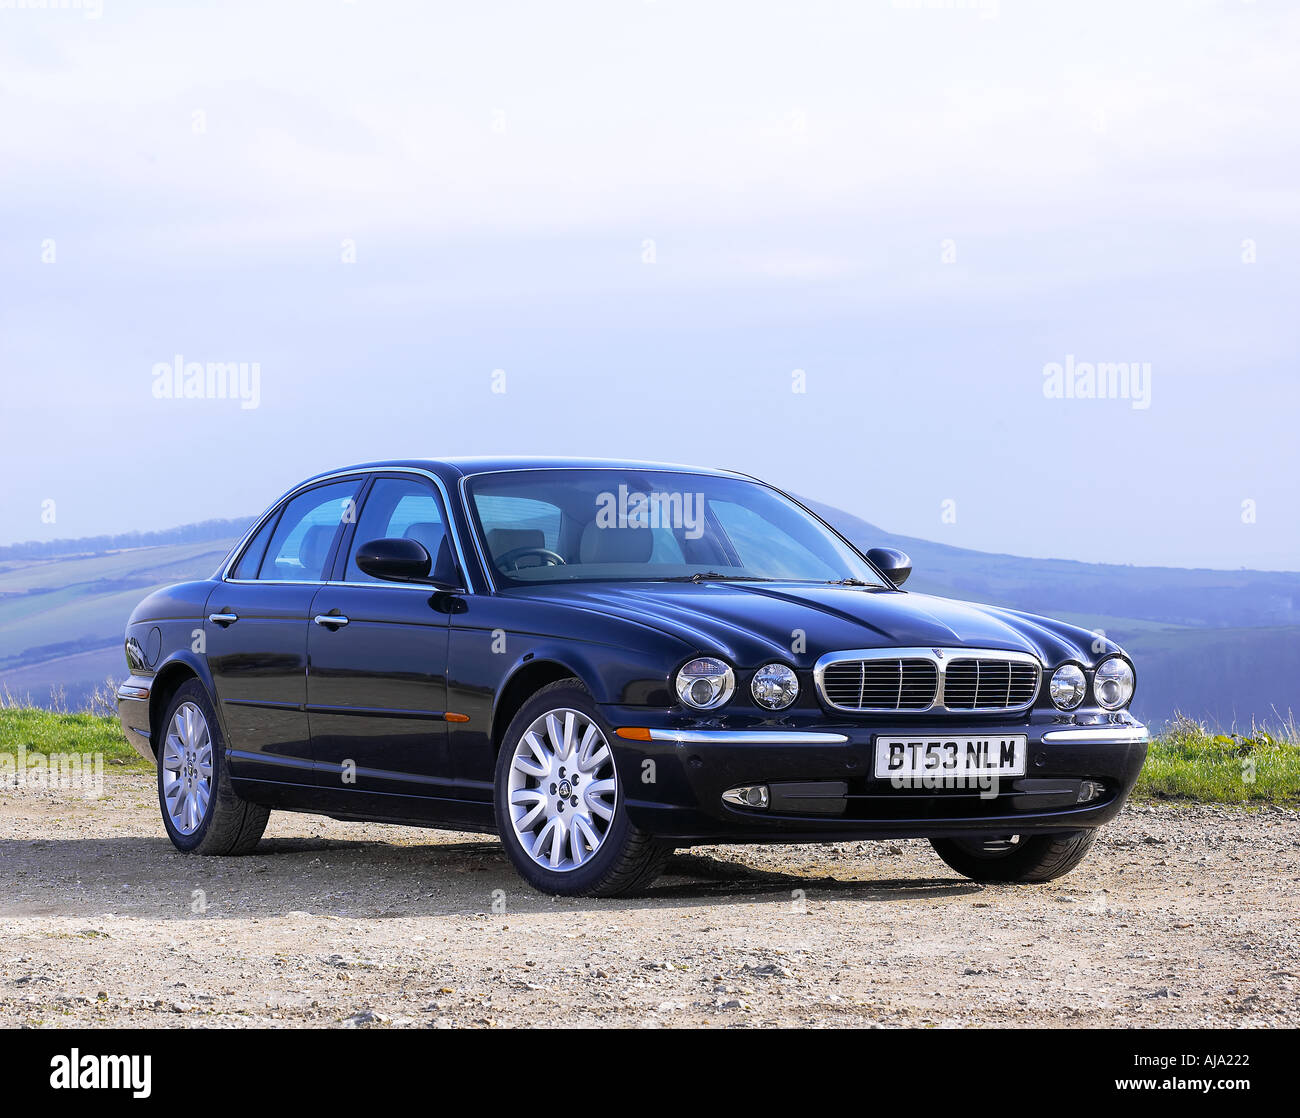 Jaguar xj8 hi-res stock photography and images - Alamy